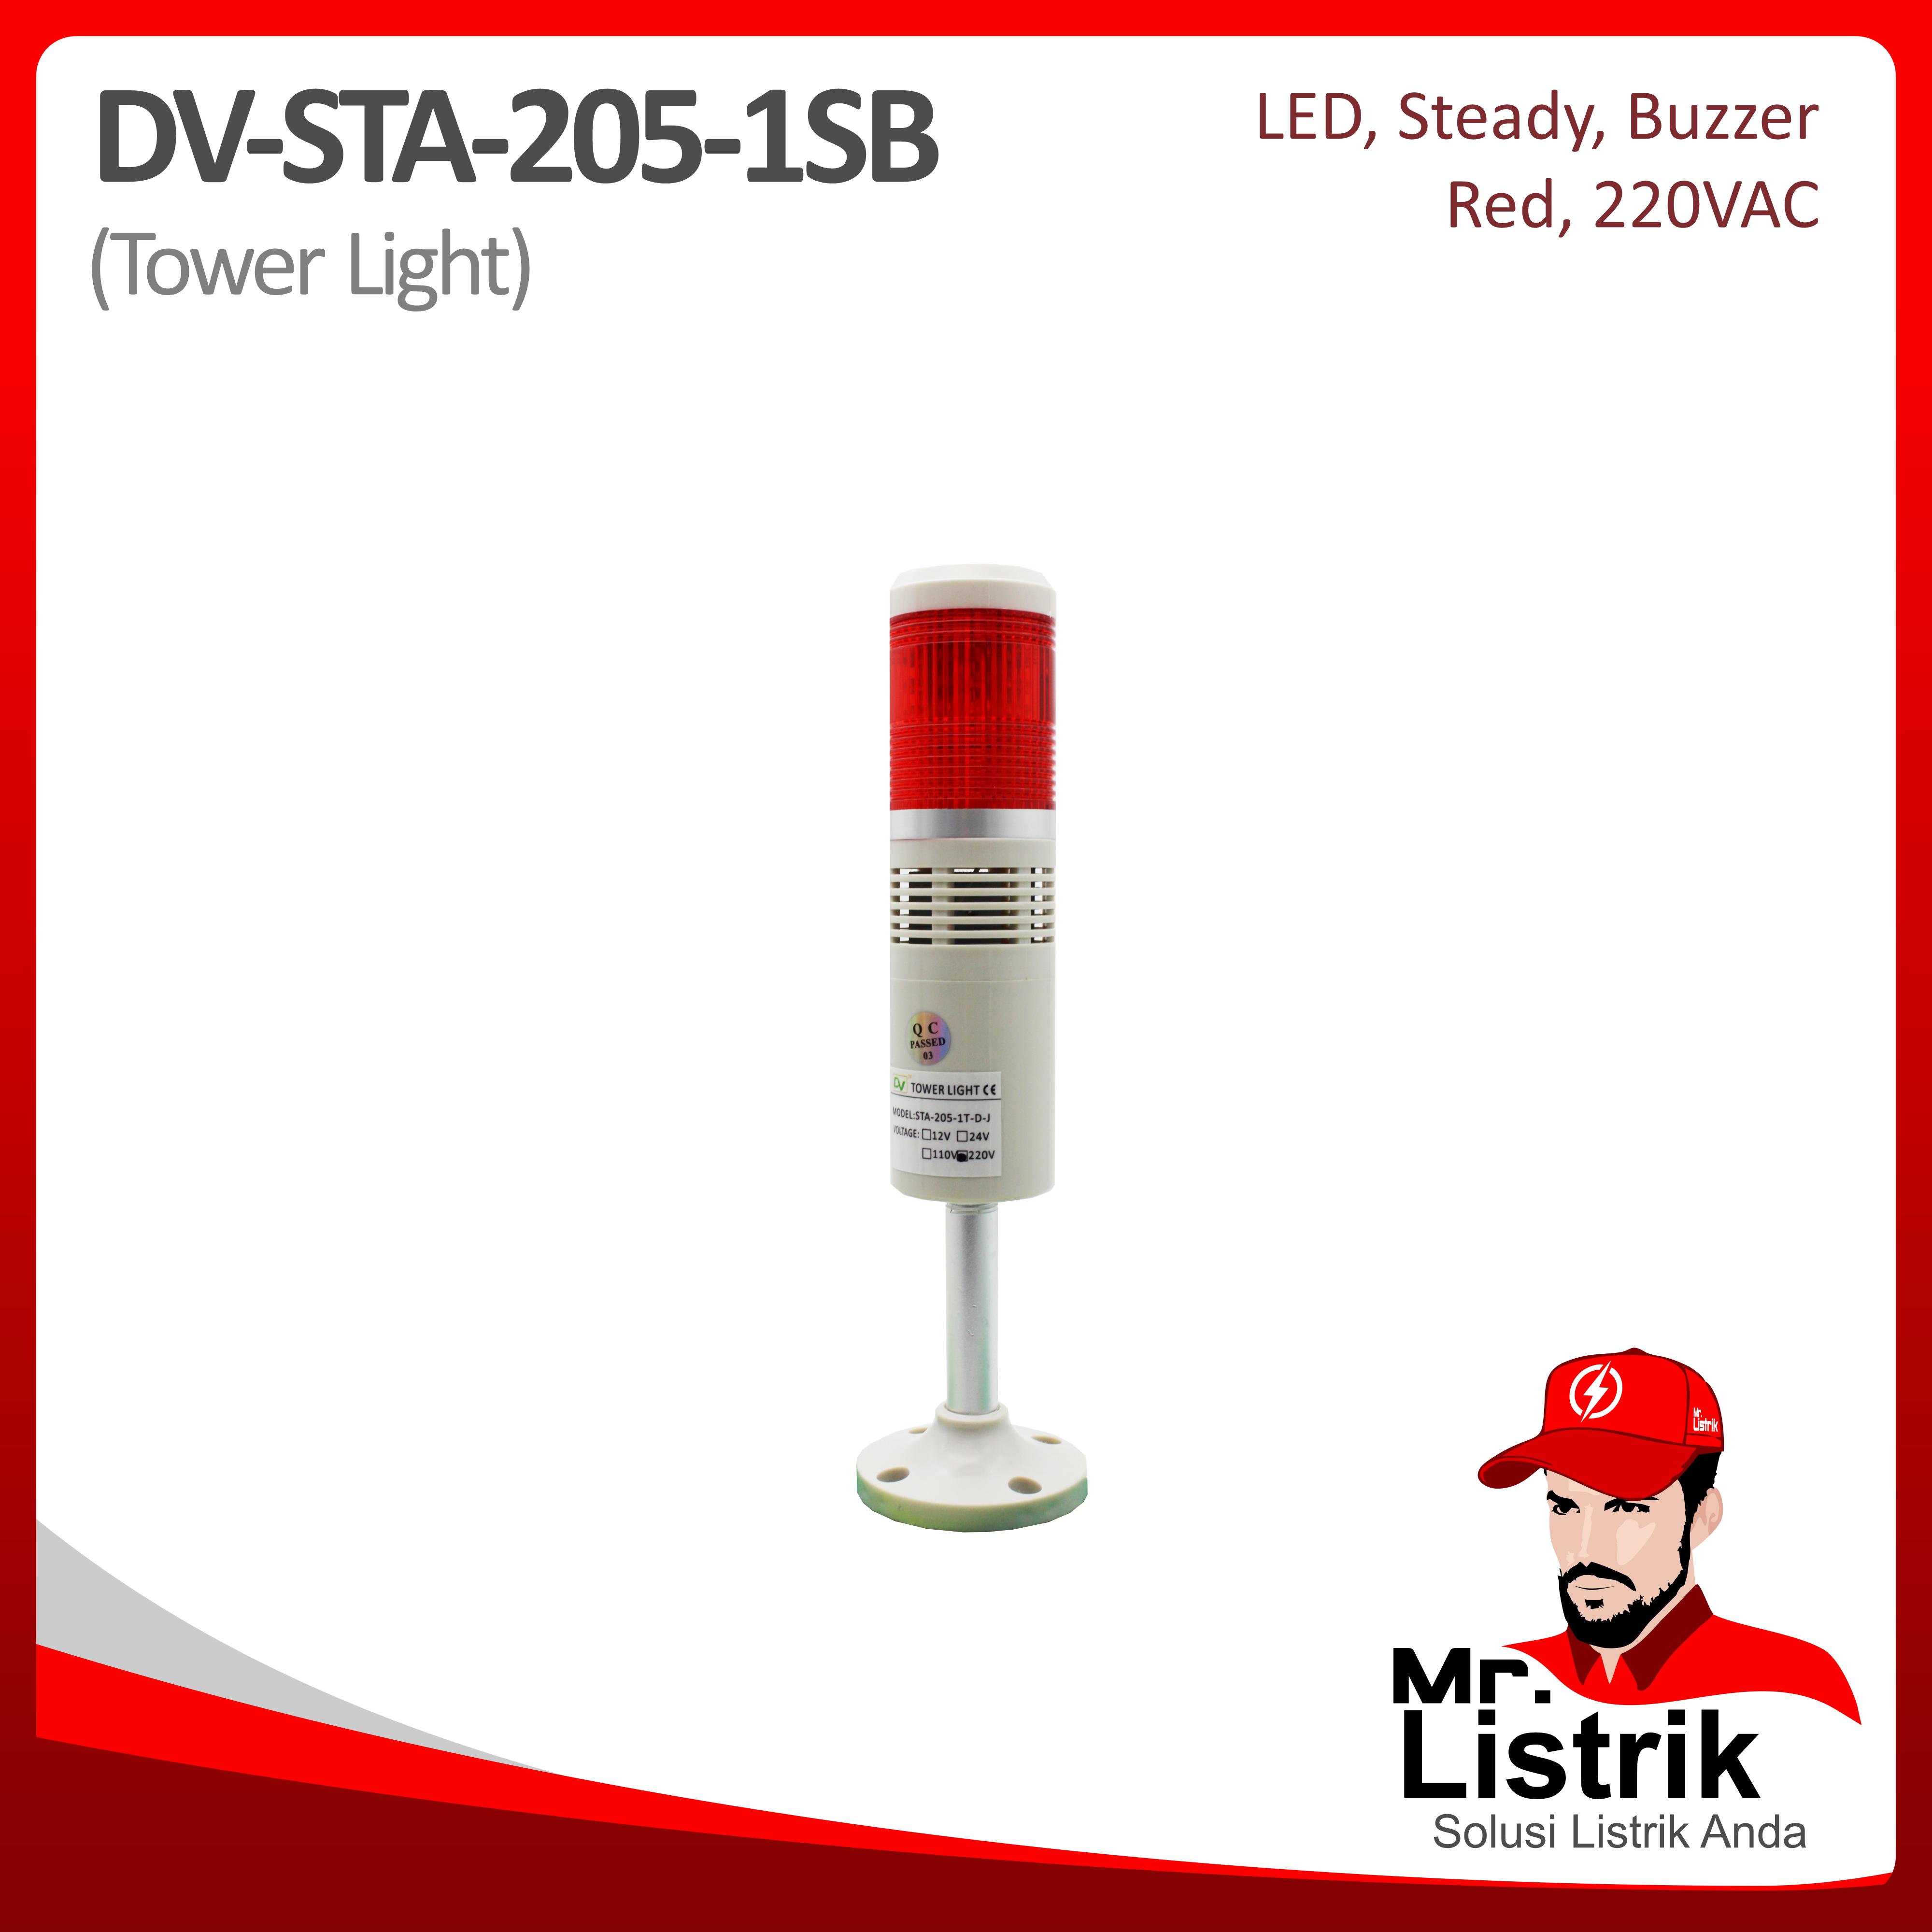 Tower Light LED Steady Buzzer Red DV STA-205-1SB